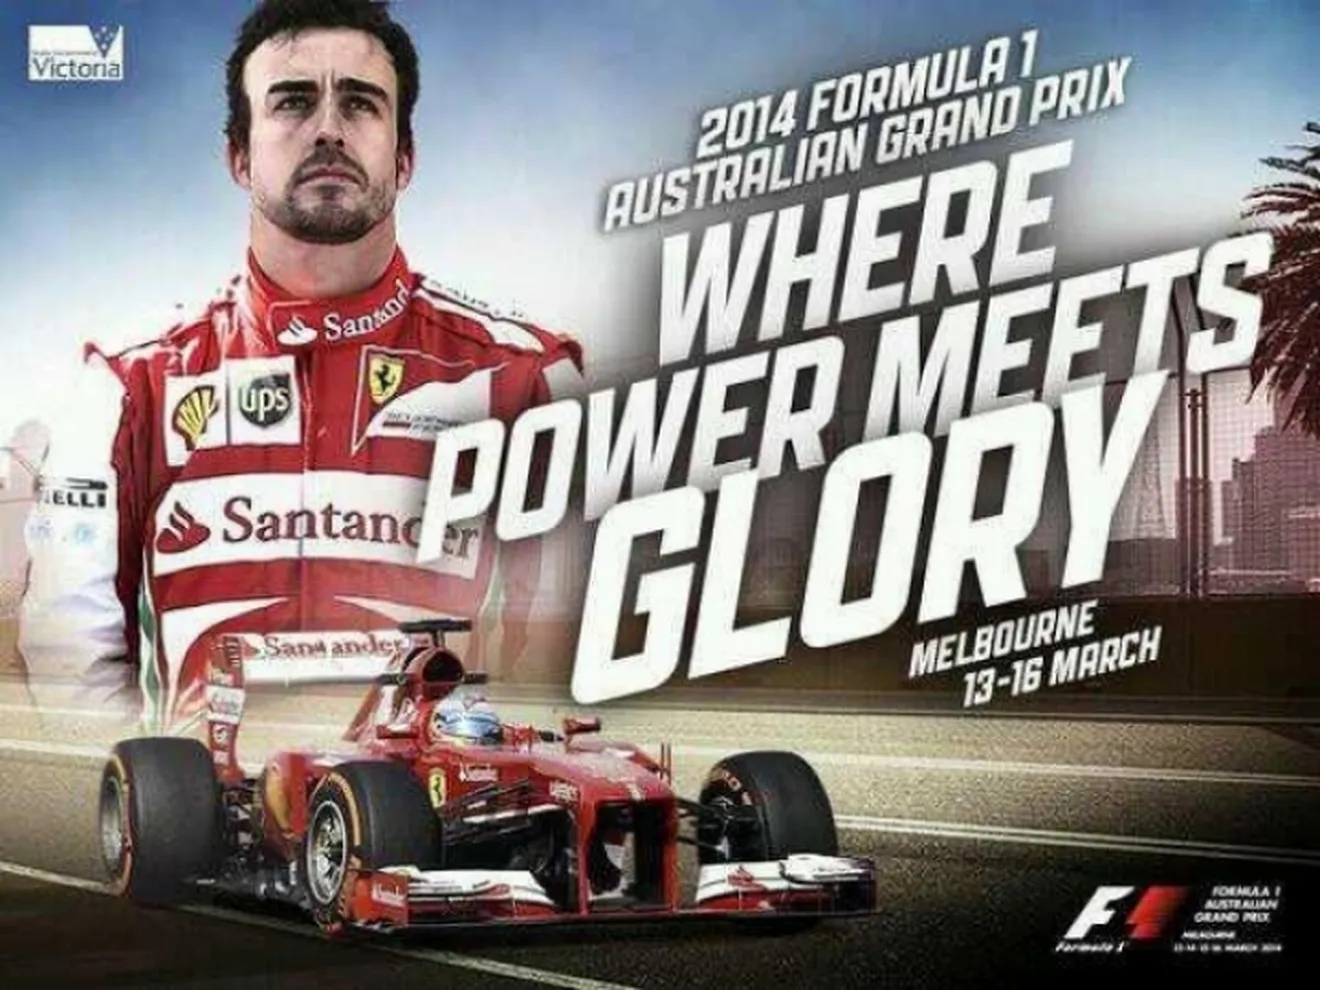 Fernando Alonso, protagonista del cartel del GP Australia F1 2014